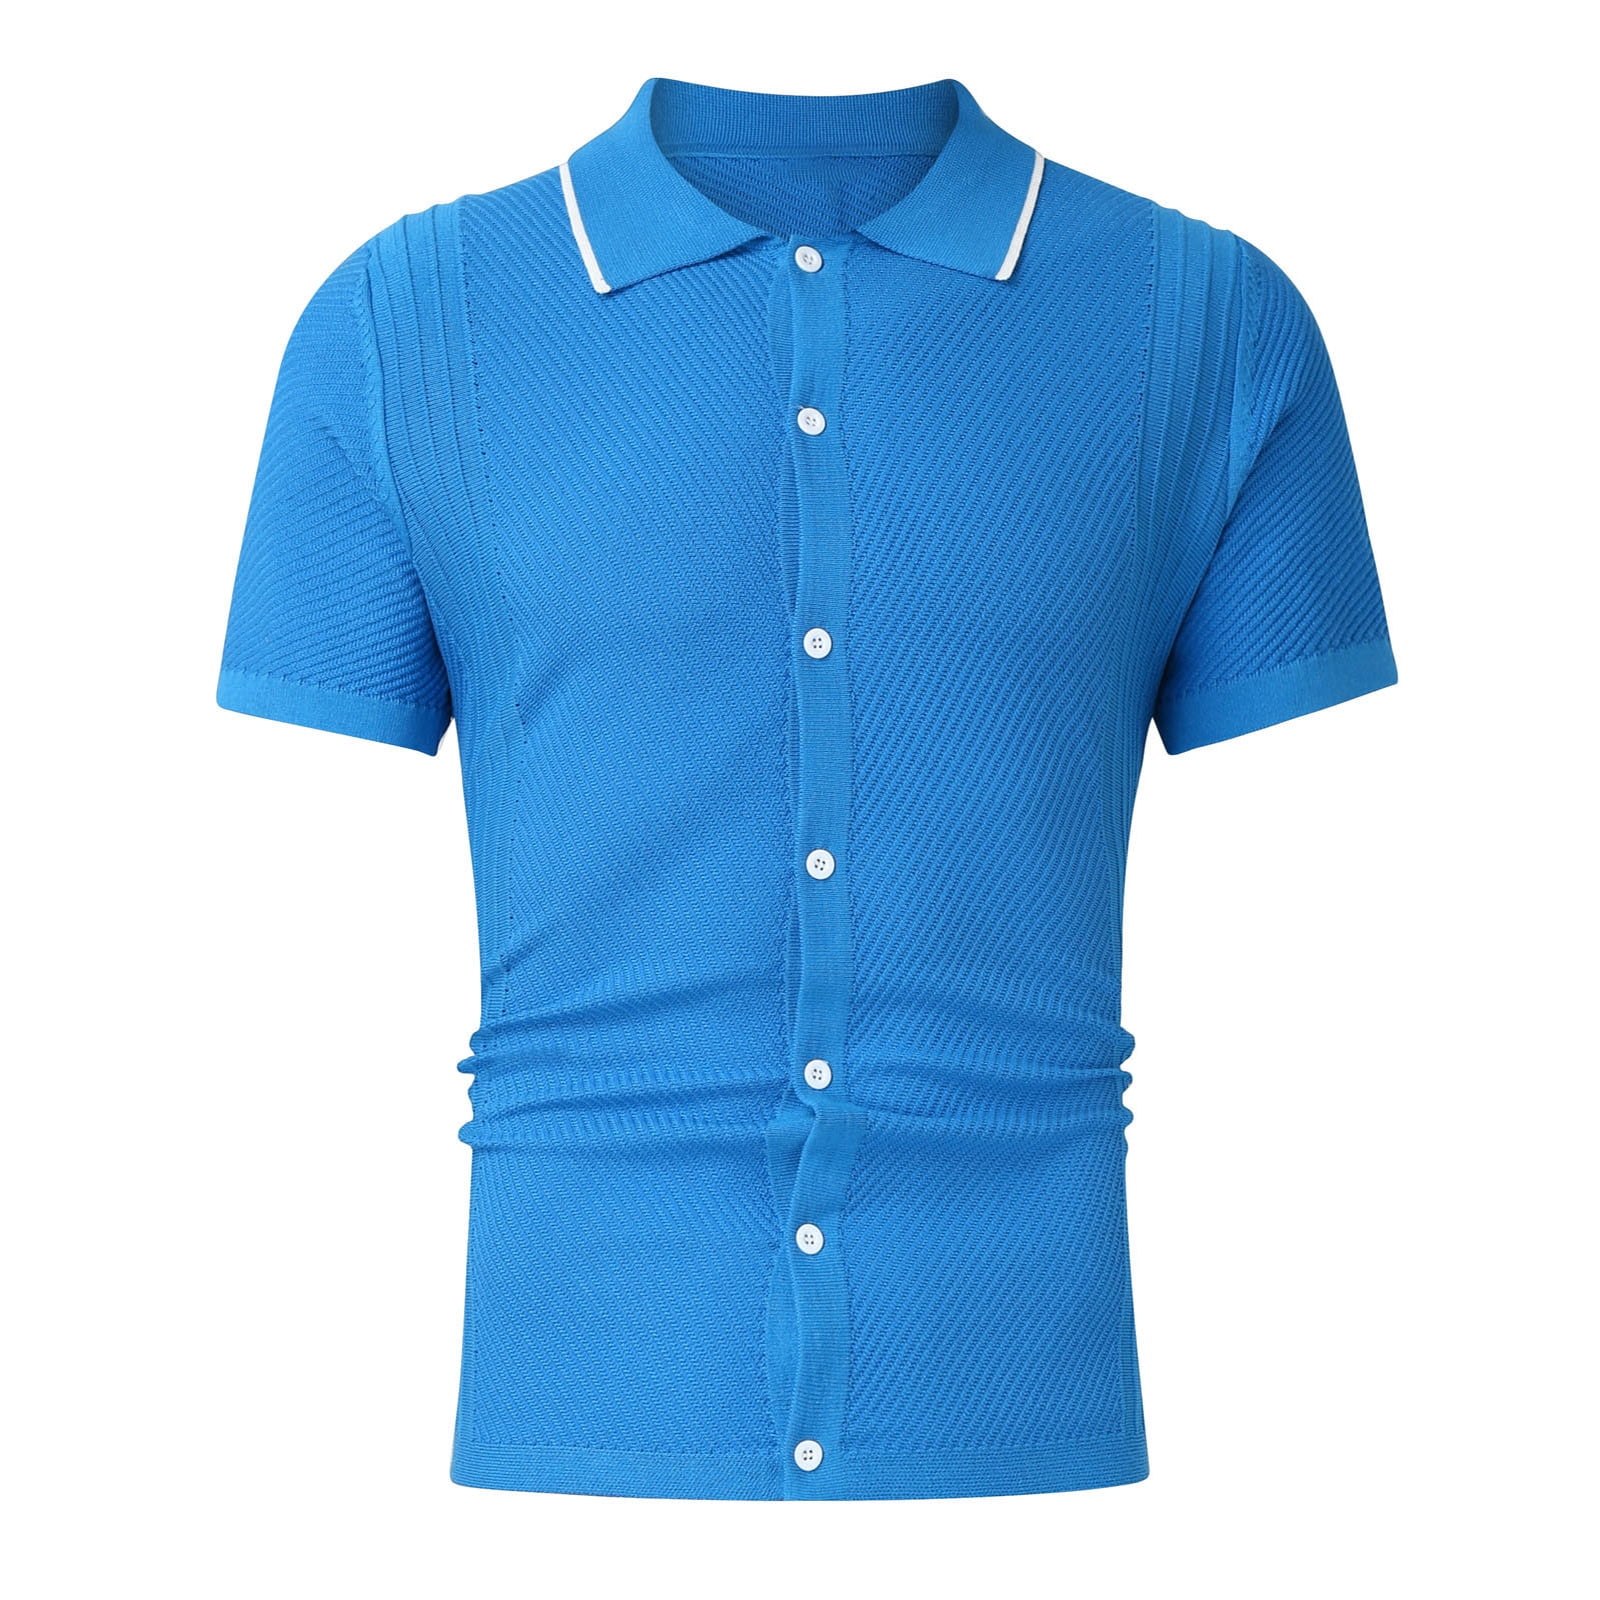 Sngxgn Men's Golf Polo Shirts Tennis Shirt Short Sleeve Casual Work T ...